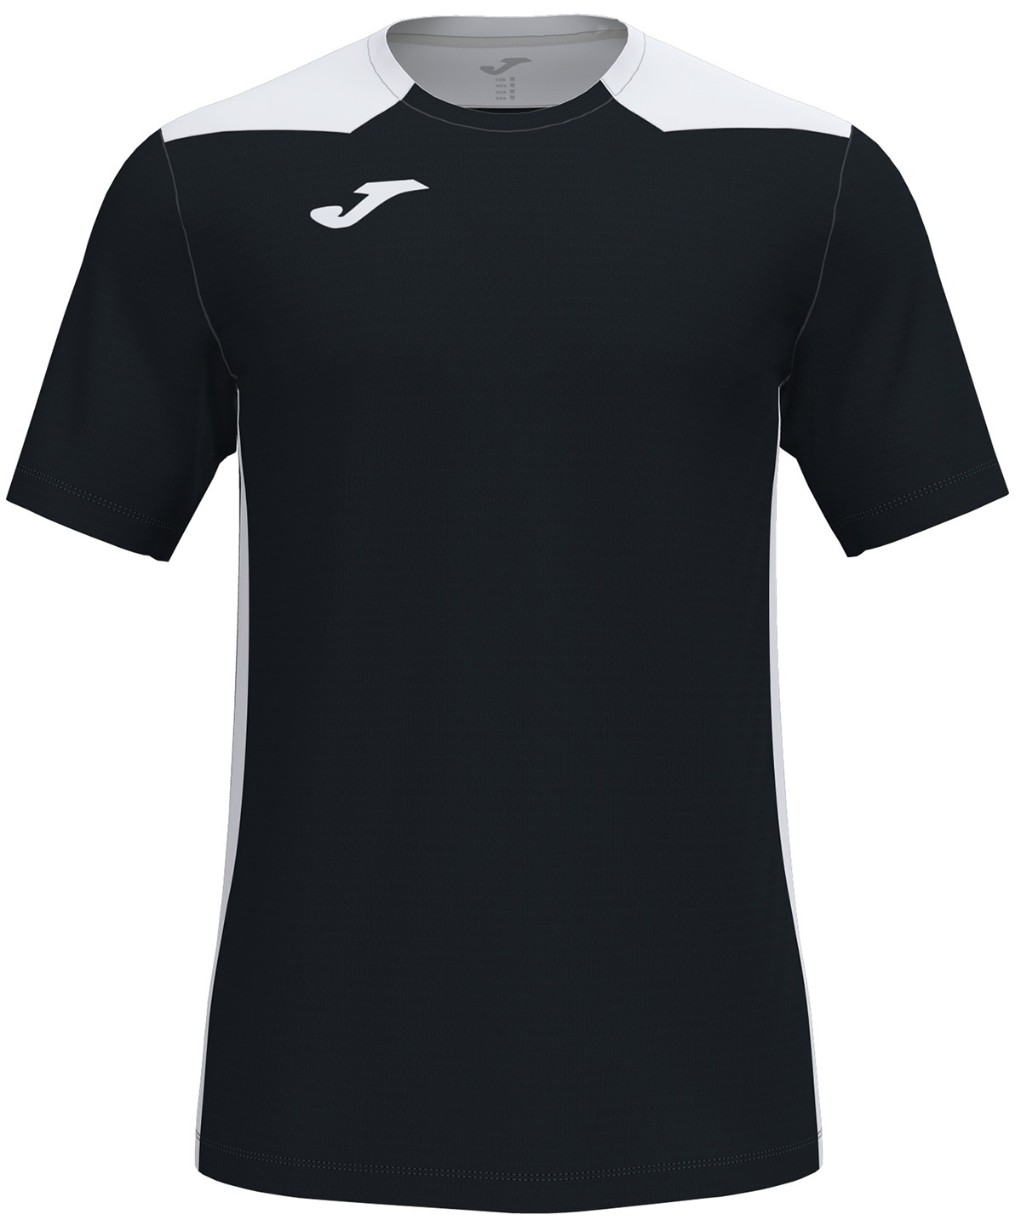 Мужская футболка Joma 101822.102 Black/White XL